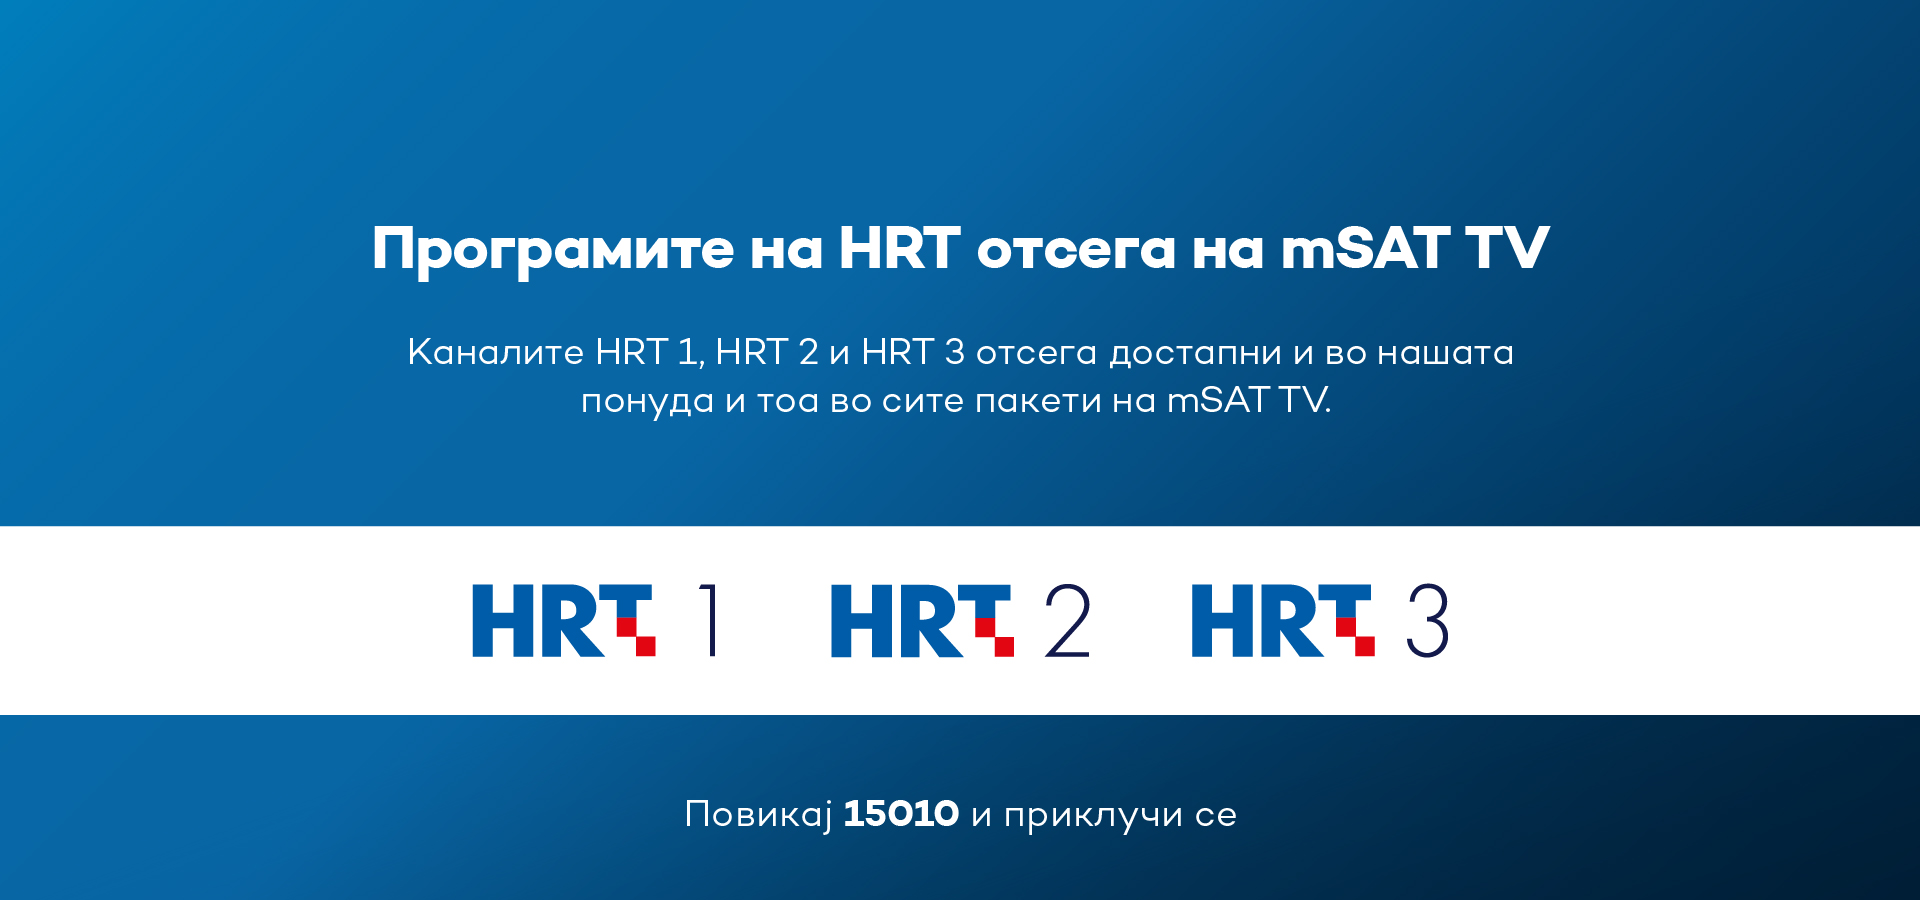 Програмите на HRT отсега на mSAT TV